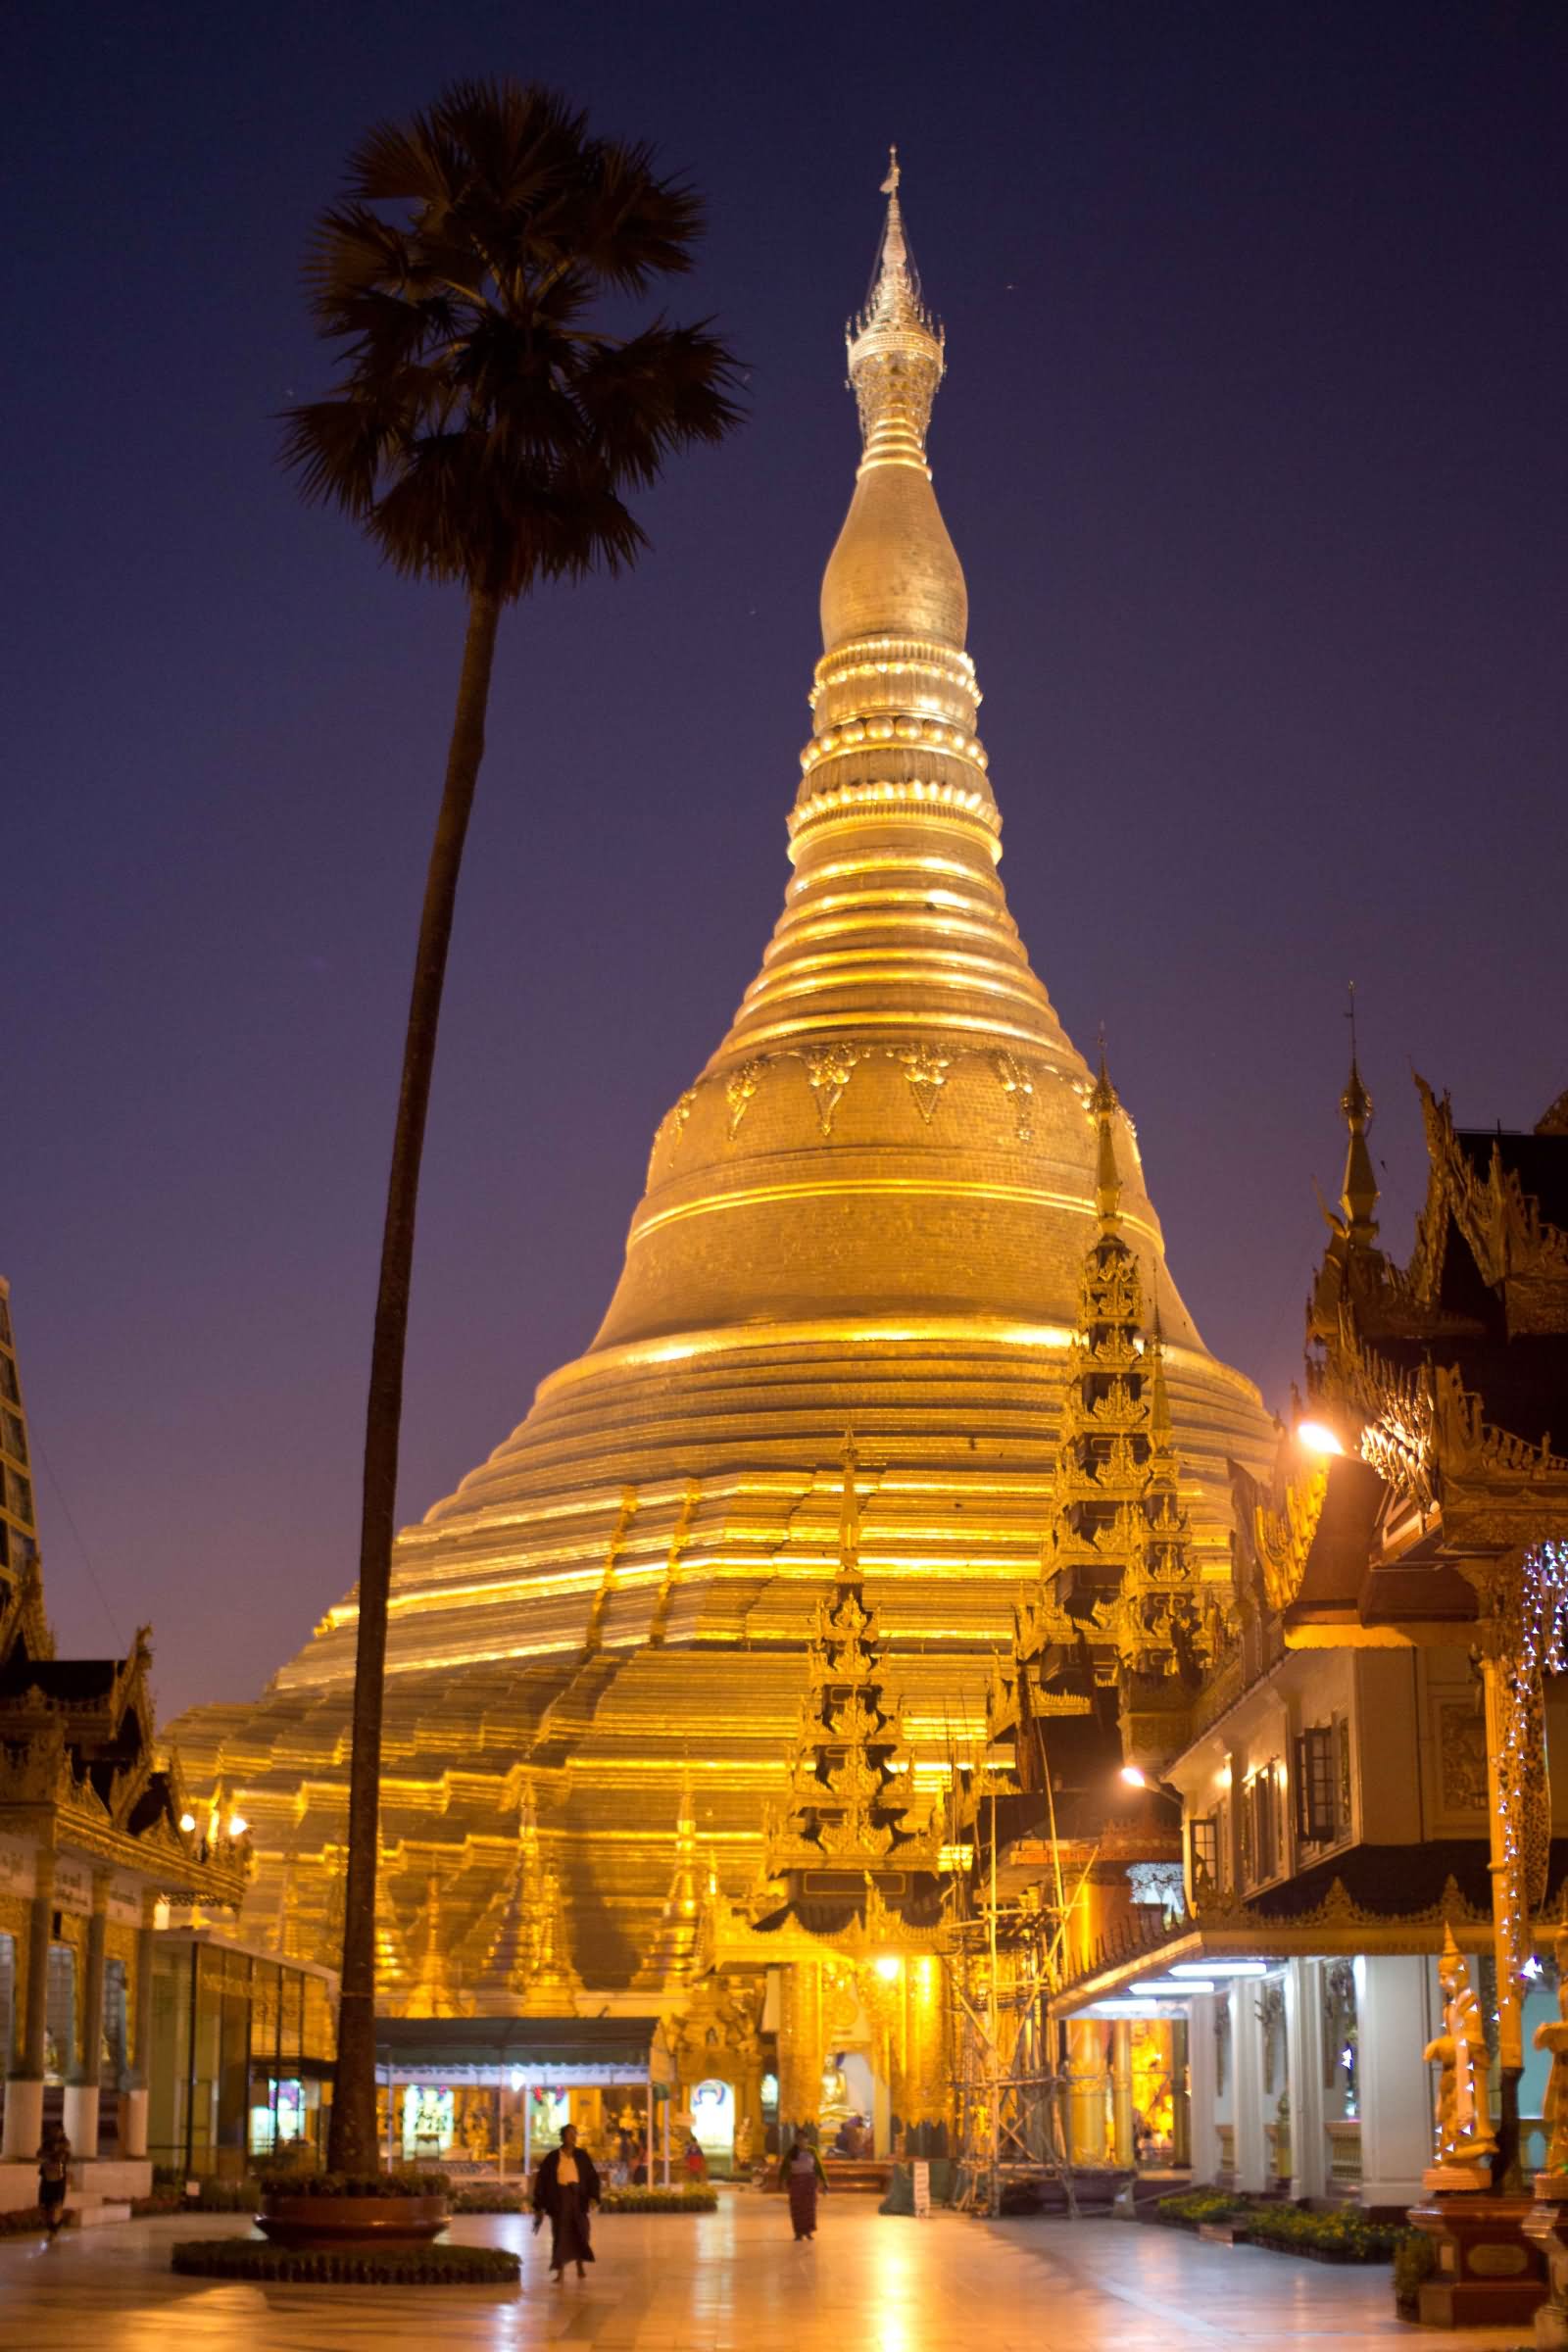 50 Incredible Night View Images And Photos Of Shwedagon Pagoda, Myanmar